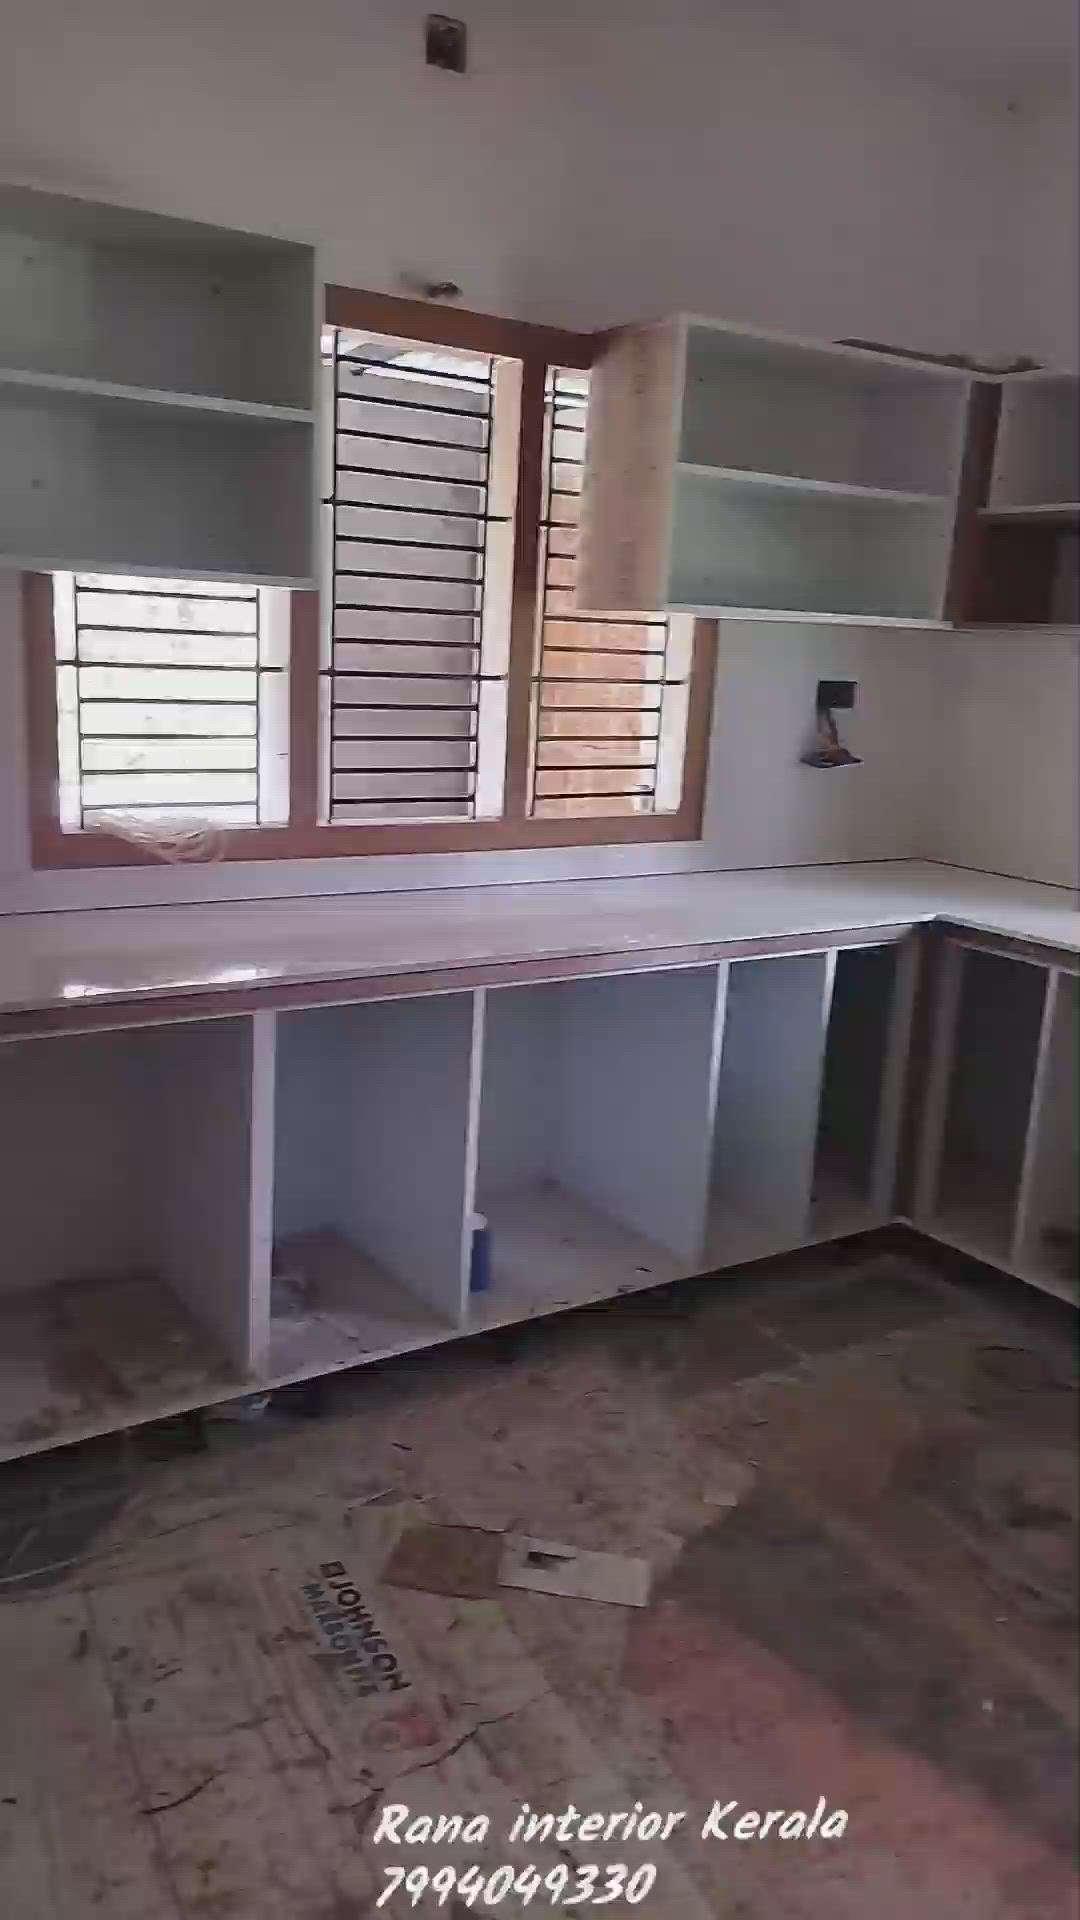 moduler kitchen cabinets
follow me Rana interior Kerala carpenter 7994049330